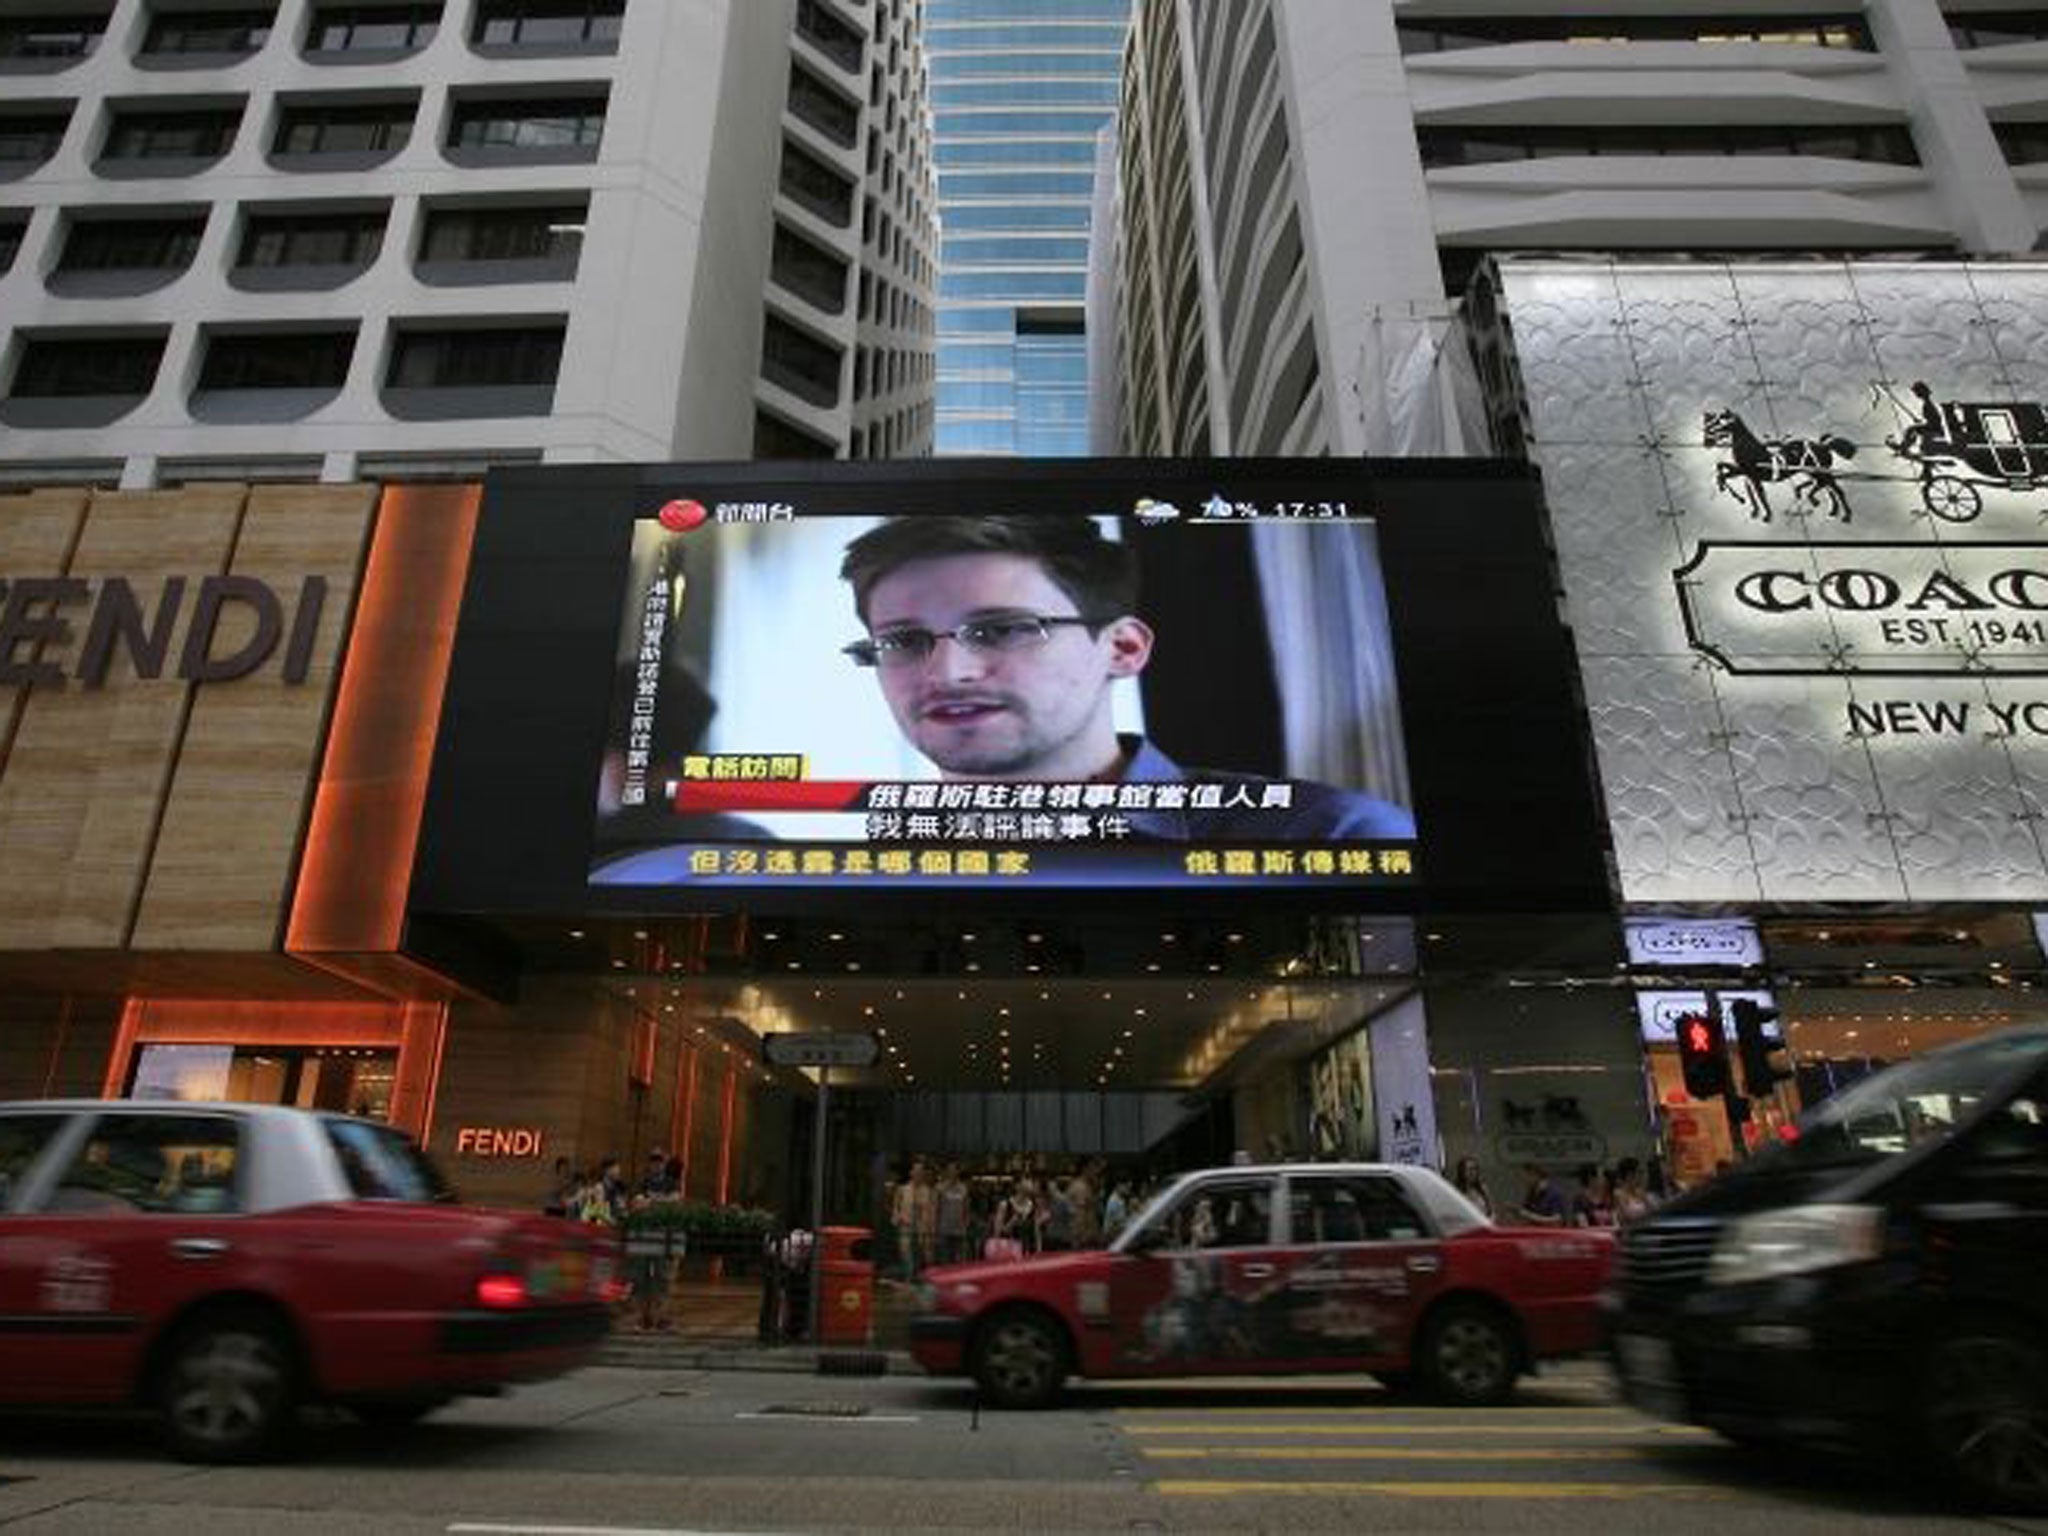 gGobal alert: Edward Snowden news flash at a Hong Kong shopping mall